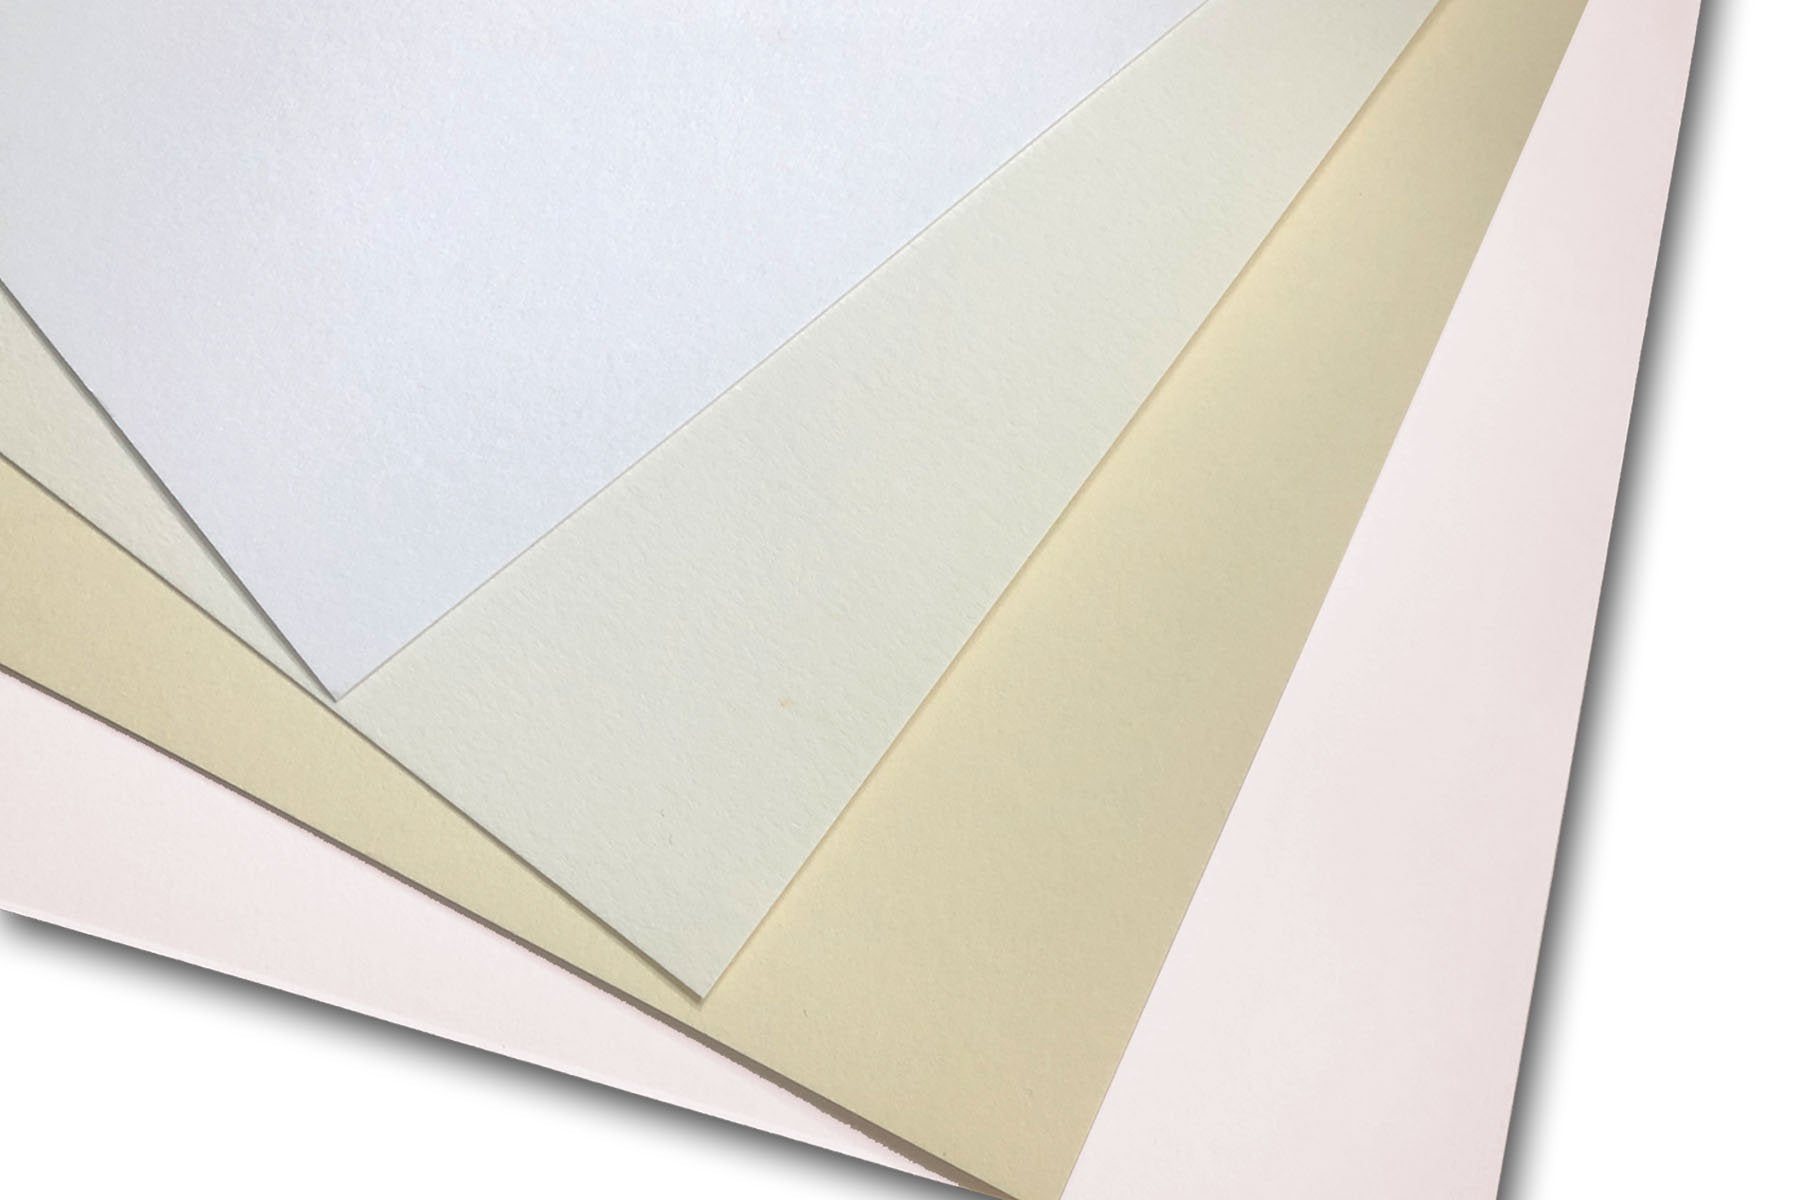 100% Cotton Fluorescent White - 8.5X11 Size Paper - 90lb Cover (243gsm) - 1